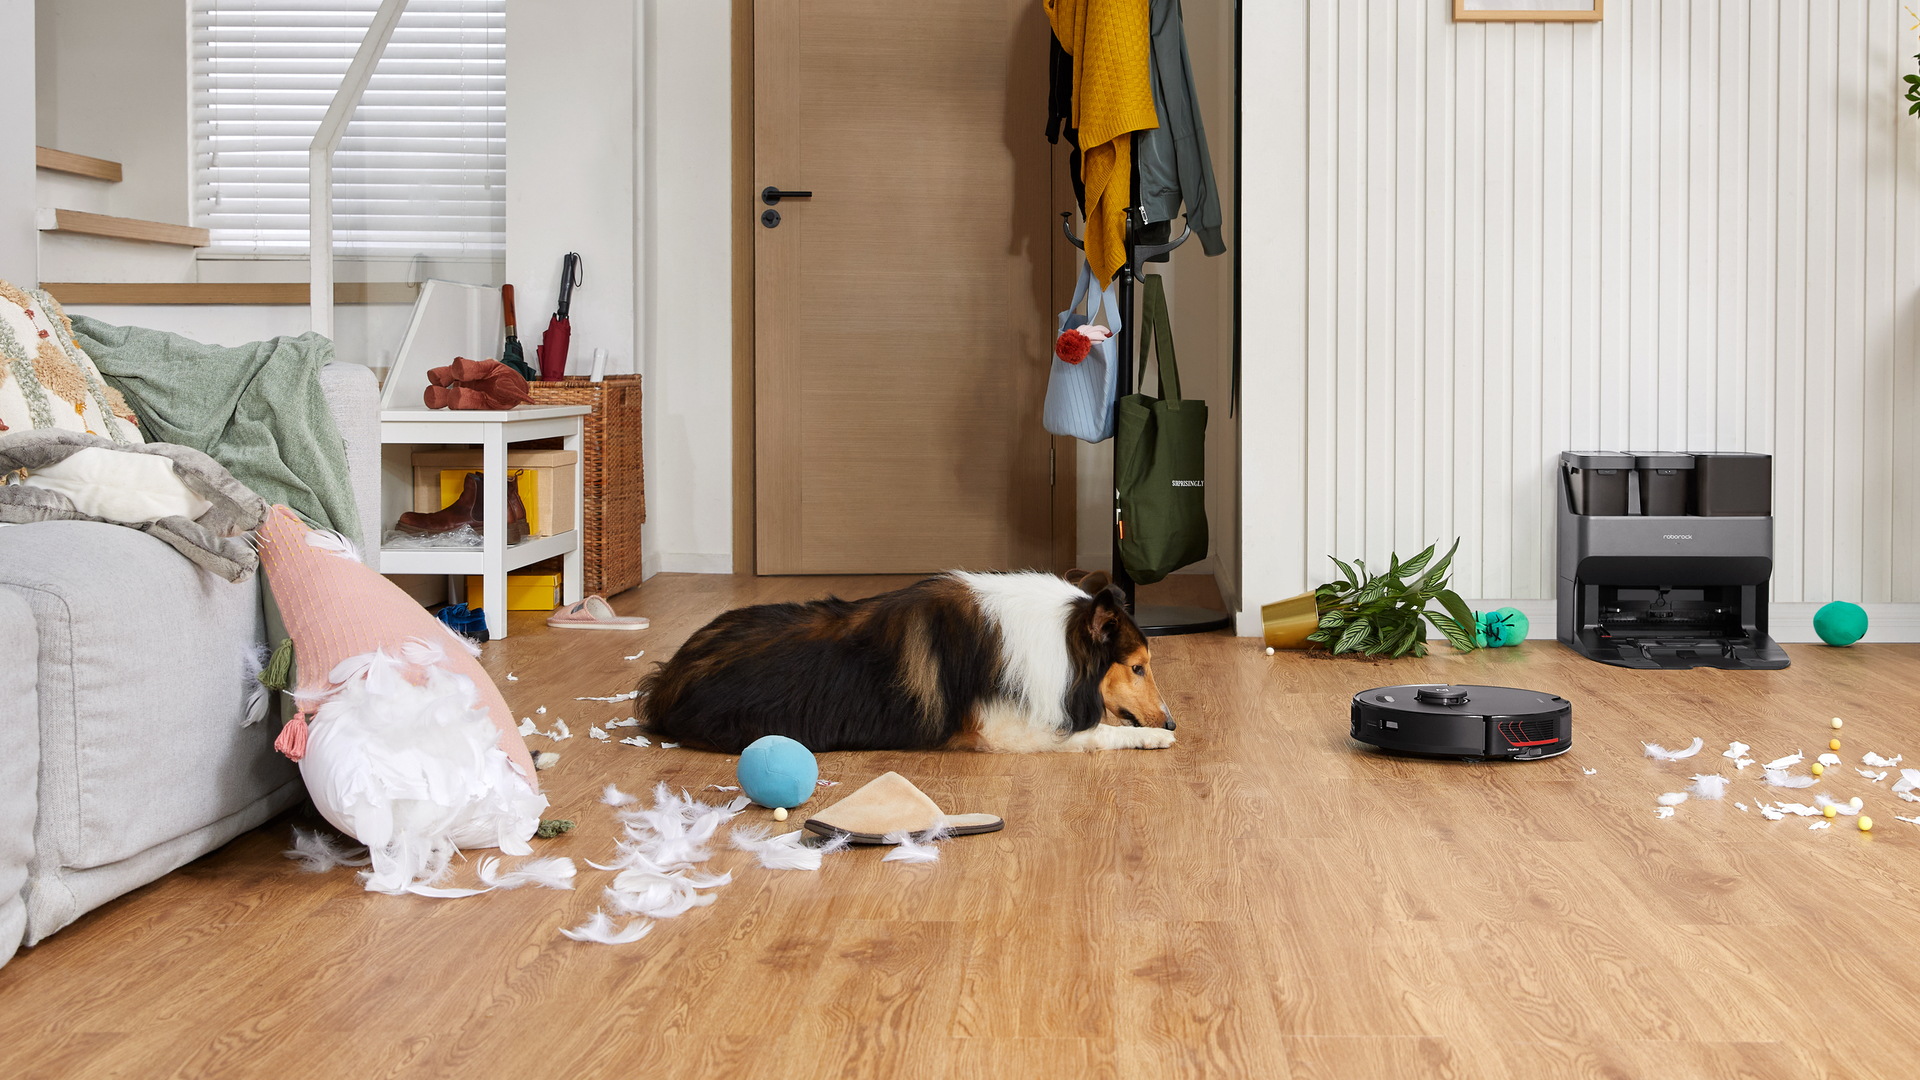 Best Robot Vacuum For Laminate Floors - Reviews of Cleaners for hard floors,  carpet, pet, rug 